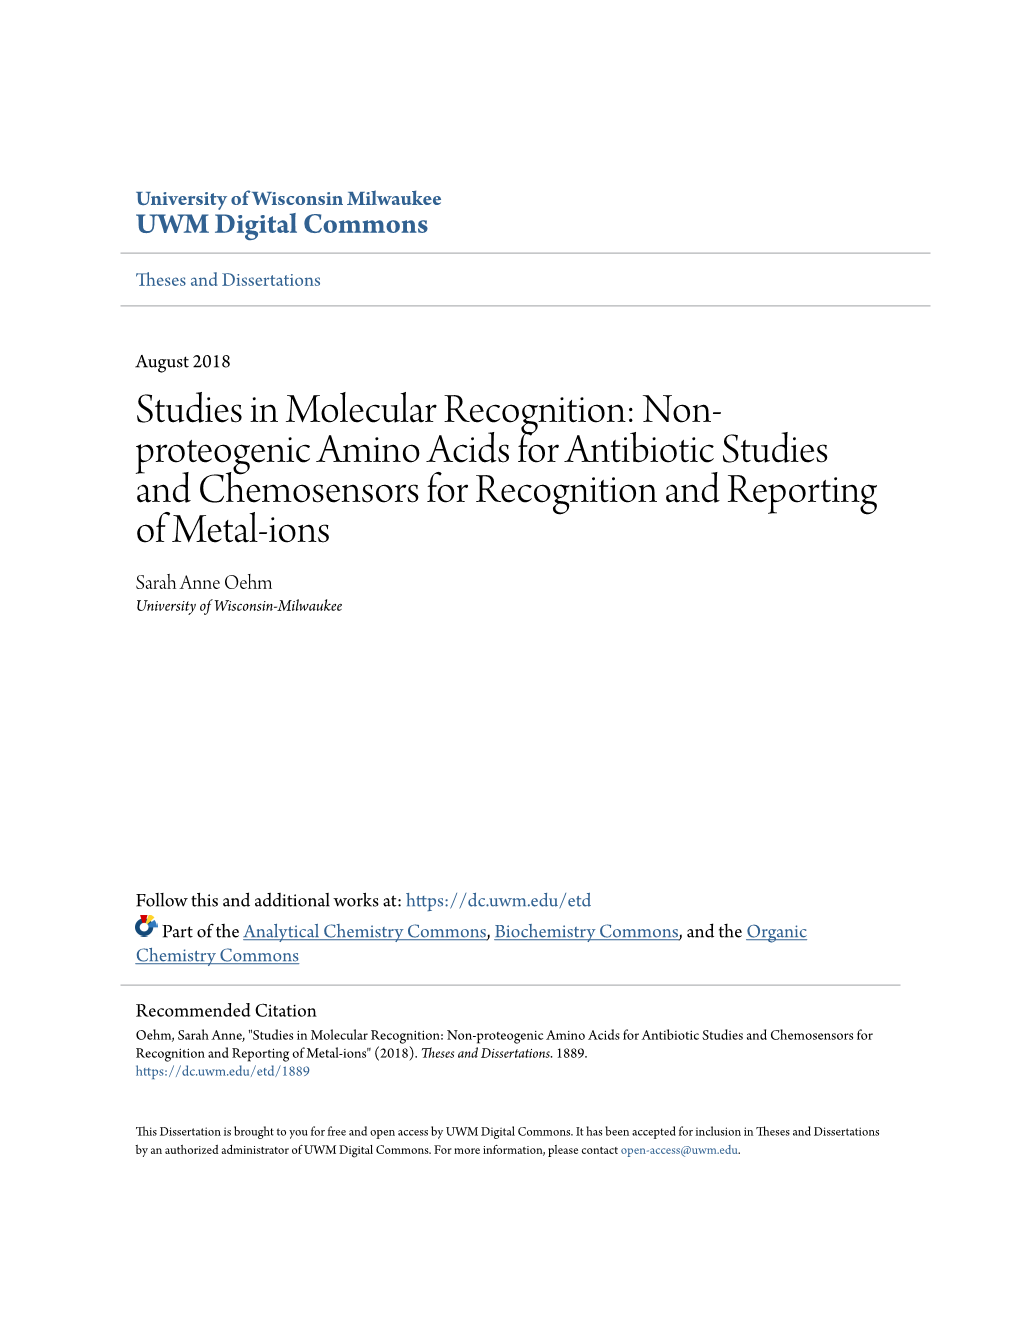 Studies in Molecular Recognition